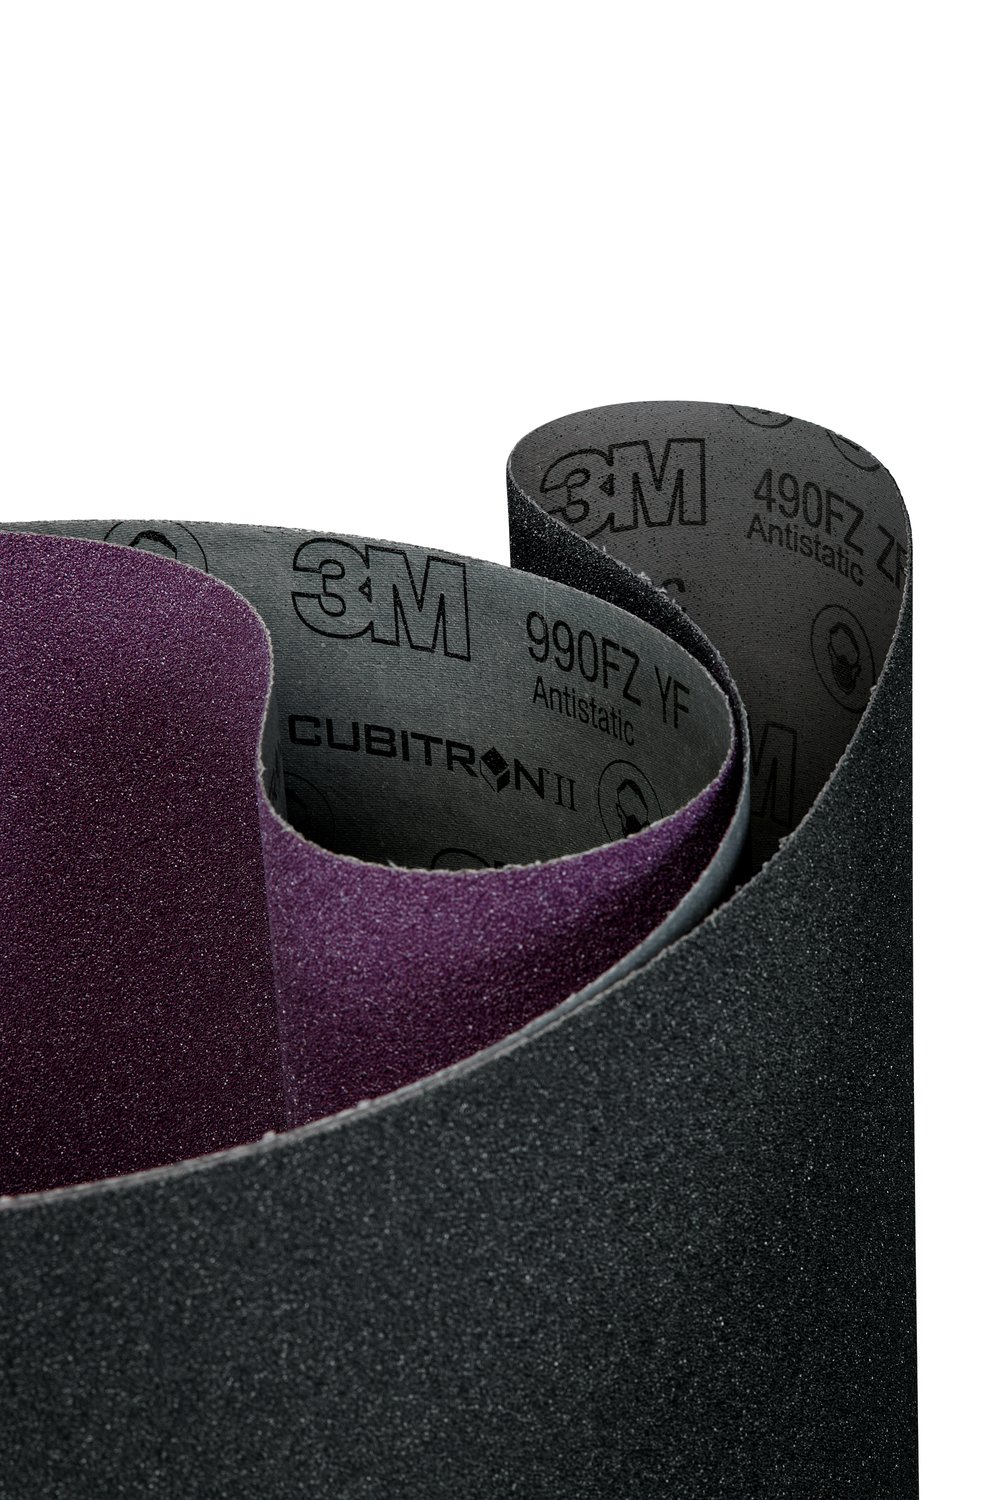 7010512299 - 3M SiC Cloth Belt 490FZ, P150 YF-weight, 37 in x 75 in, Film-lok,
Single-flex